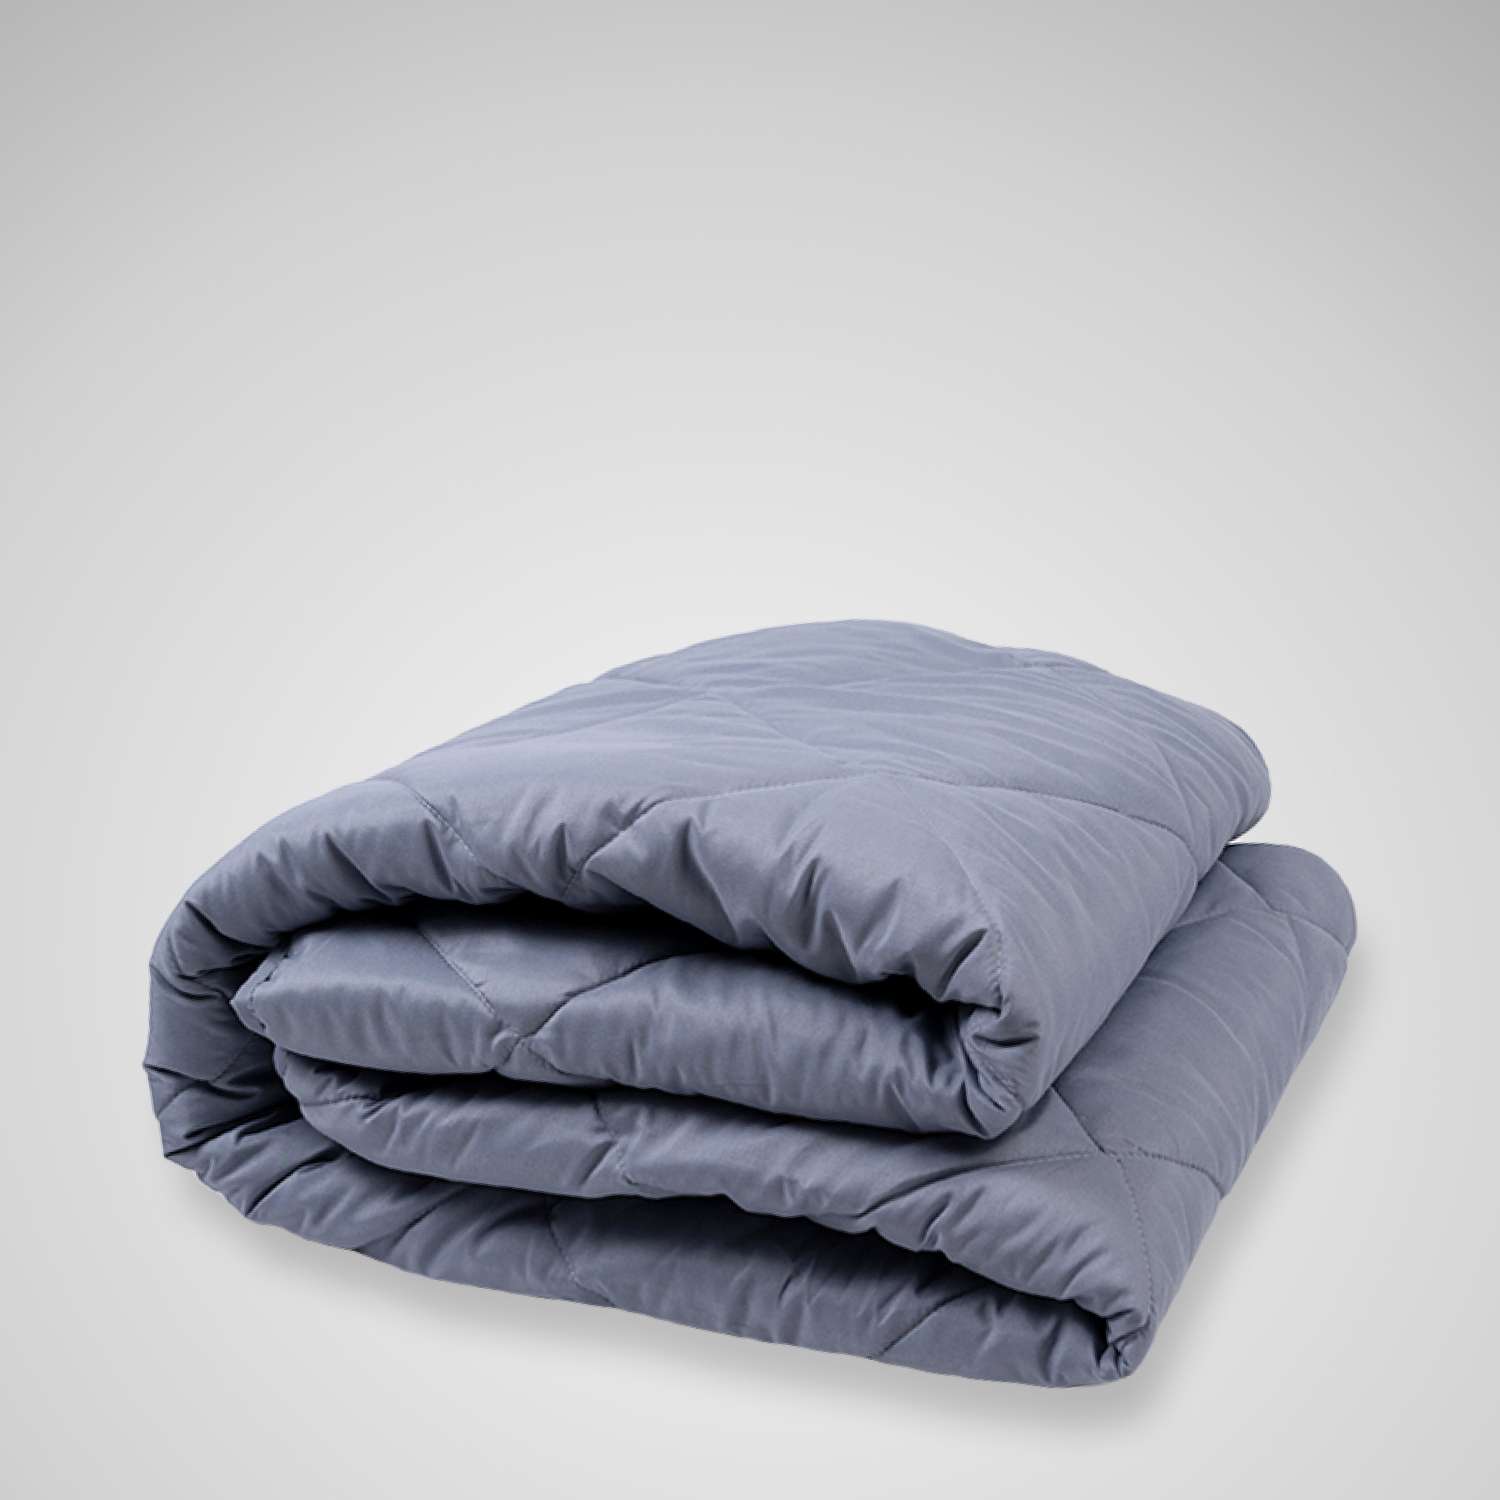 Одеяло SONNO AURA Евро-размер 200х220 Amicor TM Цвет Французский серый - фото 3